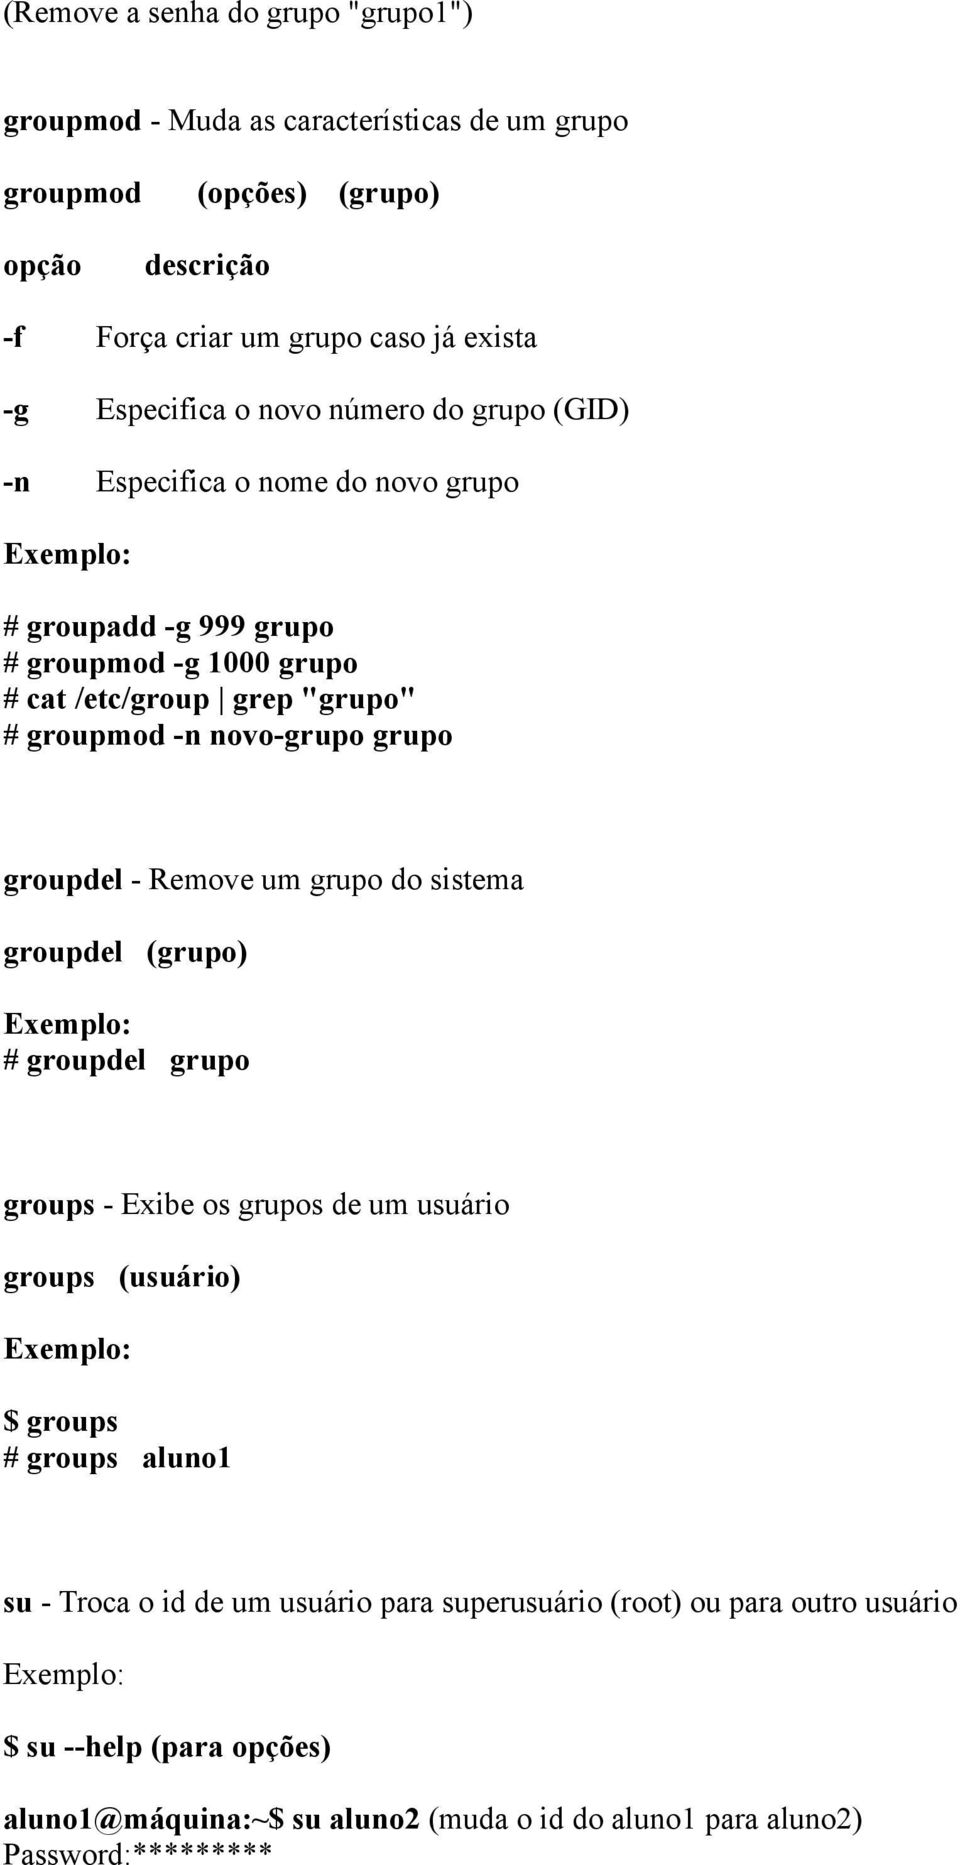 novo-grupo grupo groupdel - Remove um grupo do sistema groupdel (grupo) # groupdel grupo groups - Exibe os grupos de um usuário groups (usuário) $ groups # groups aluno1